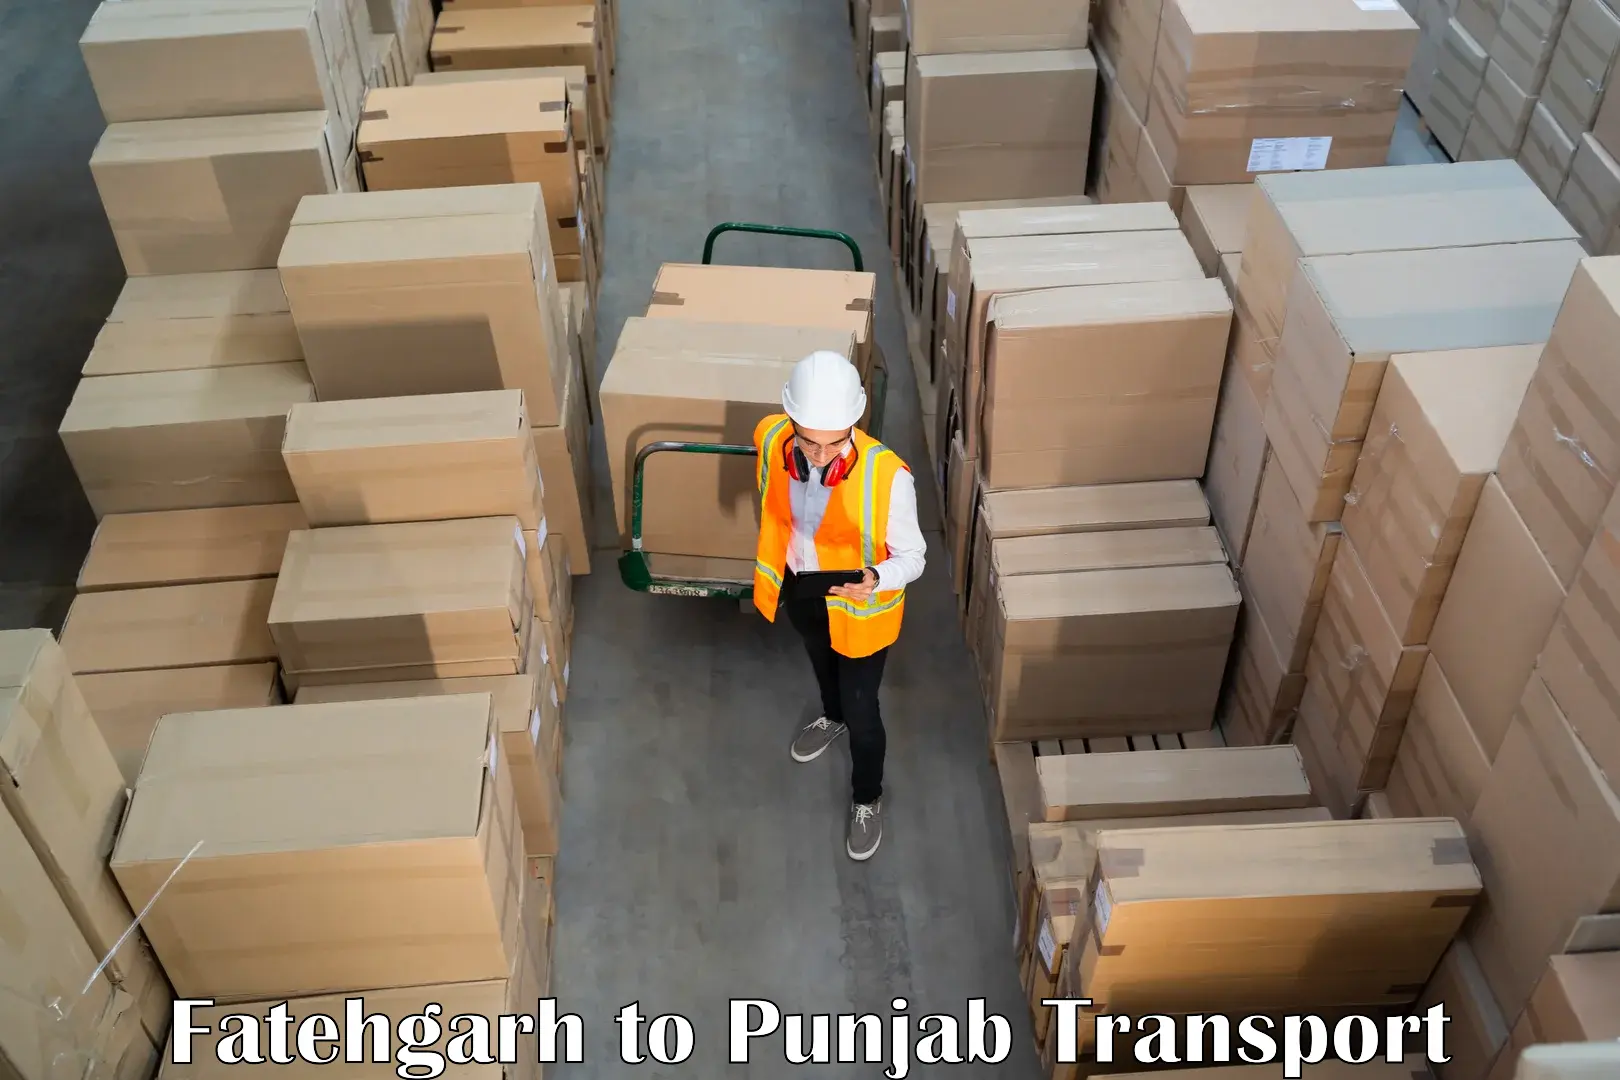 Pick up transport service Fatehgarh to Malout